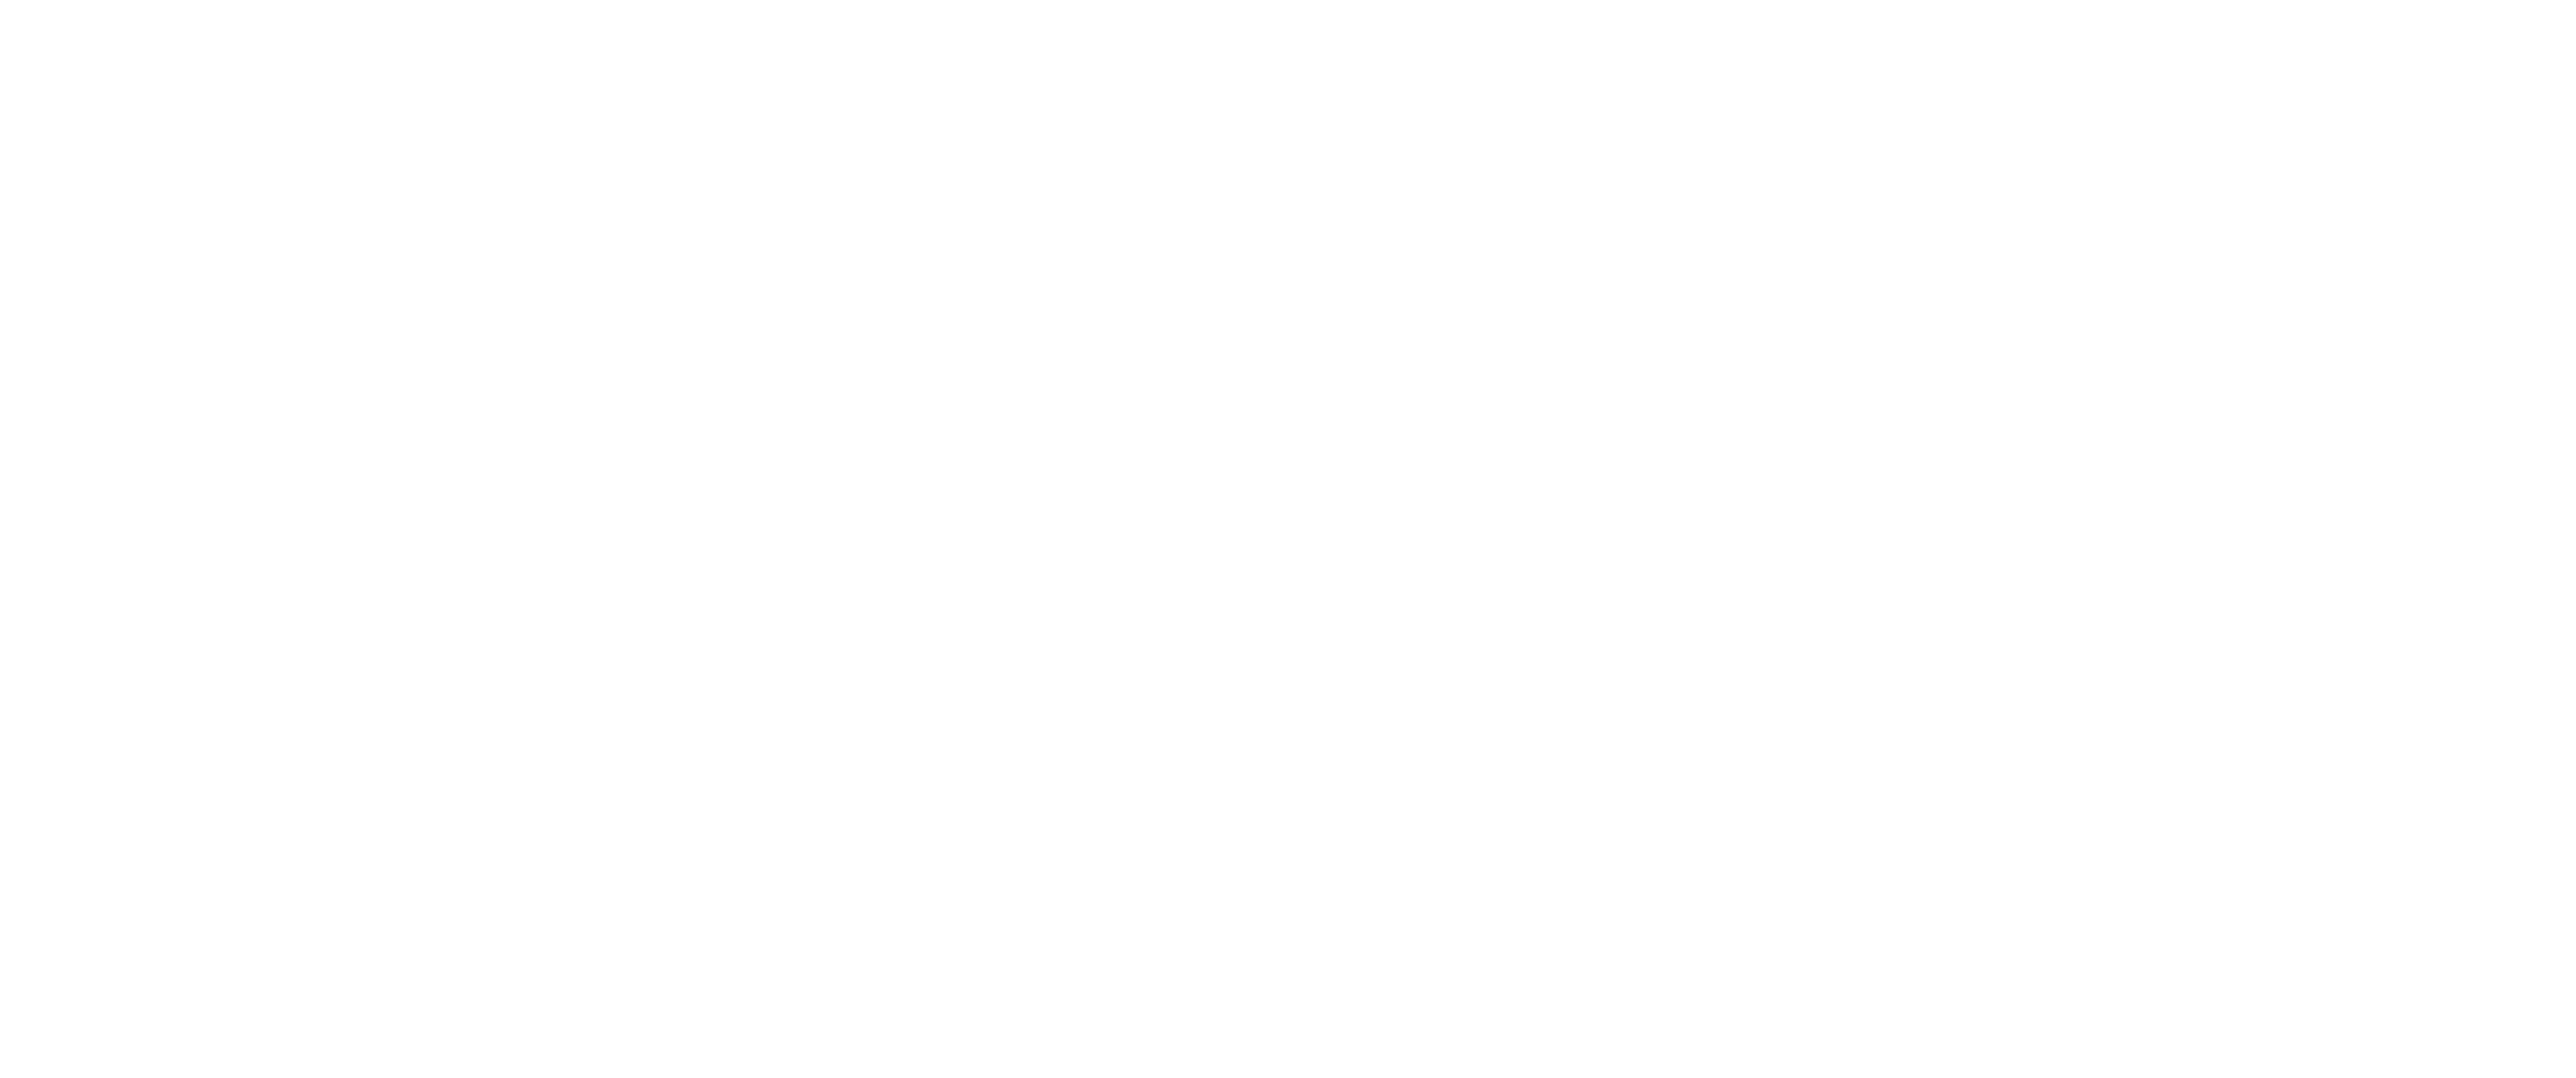 University Research Week